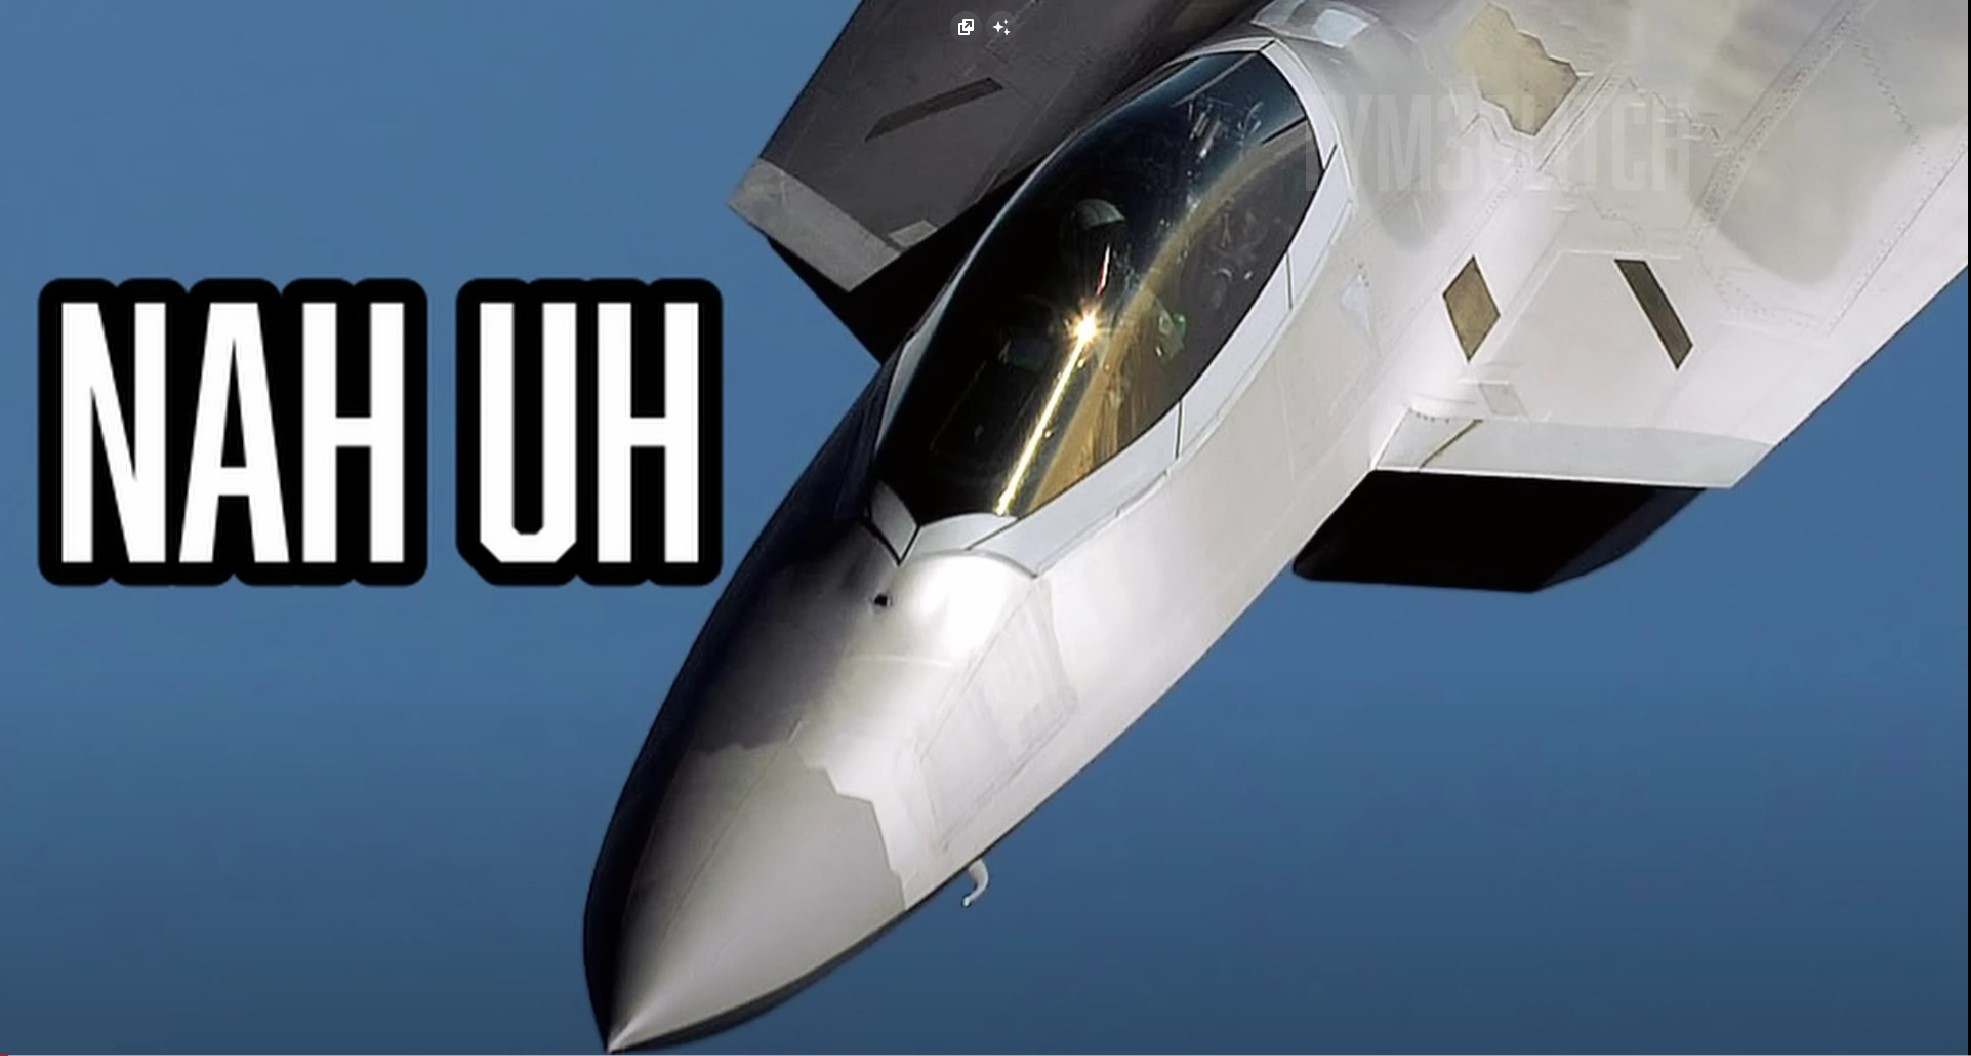 F-22 Raptor "Nah uh" Blank Meme Template